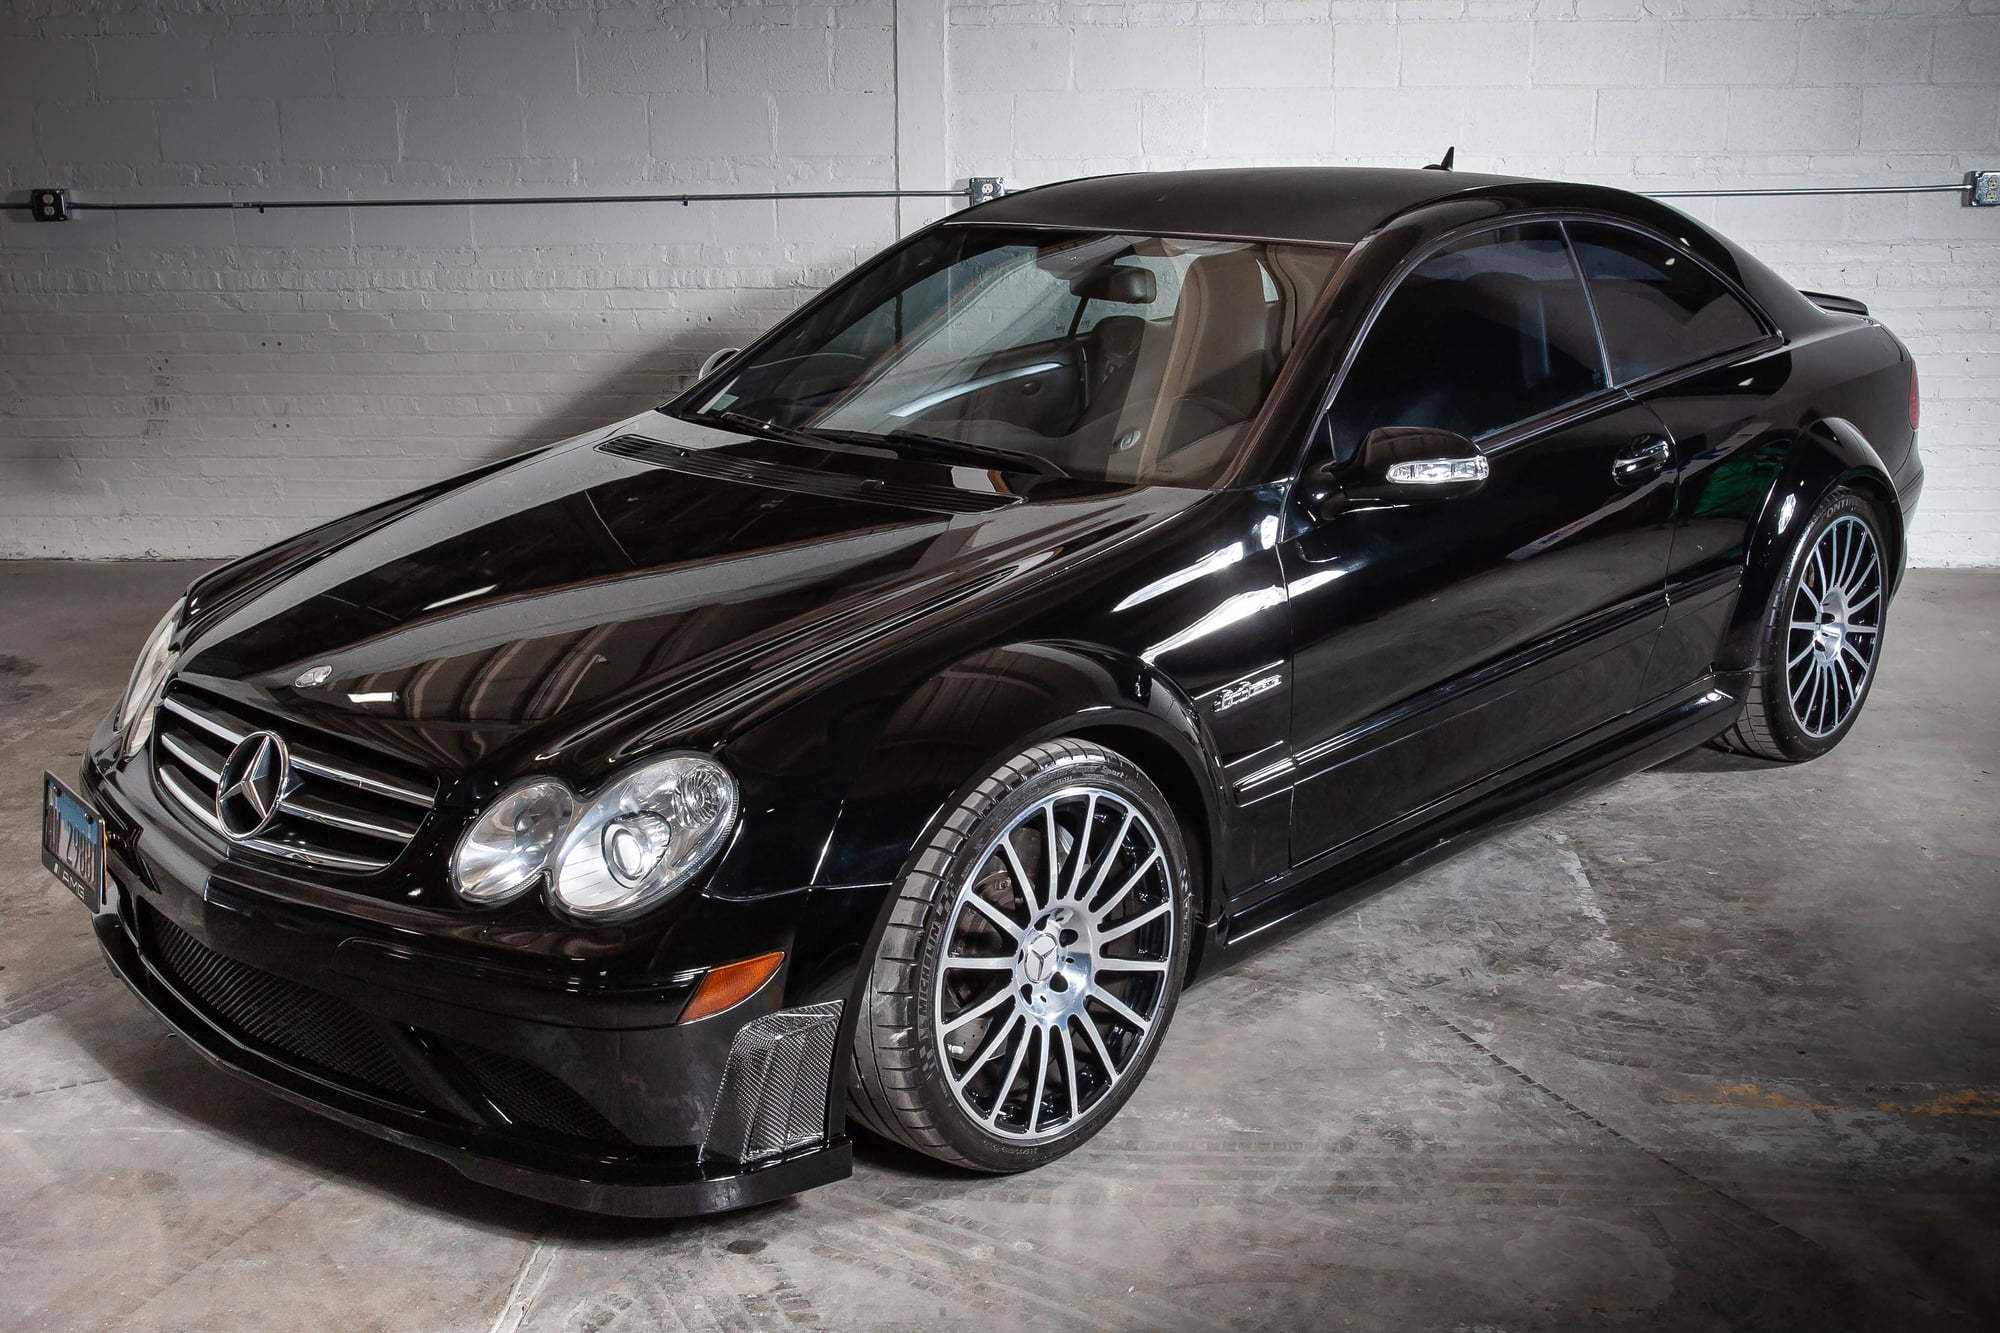 2008 Mercedes-Benz CLK63 AMG - 2008 clk63 amg black series - Used - VIN WDBTJ77H98F234434 - 50,865 Miles - Black - Chicago, IL 60607, United States